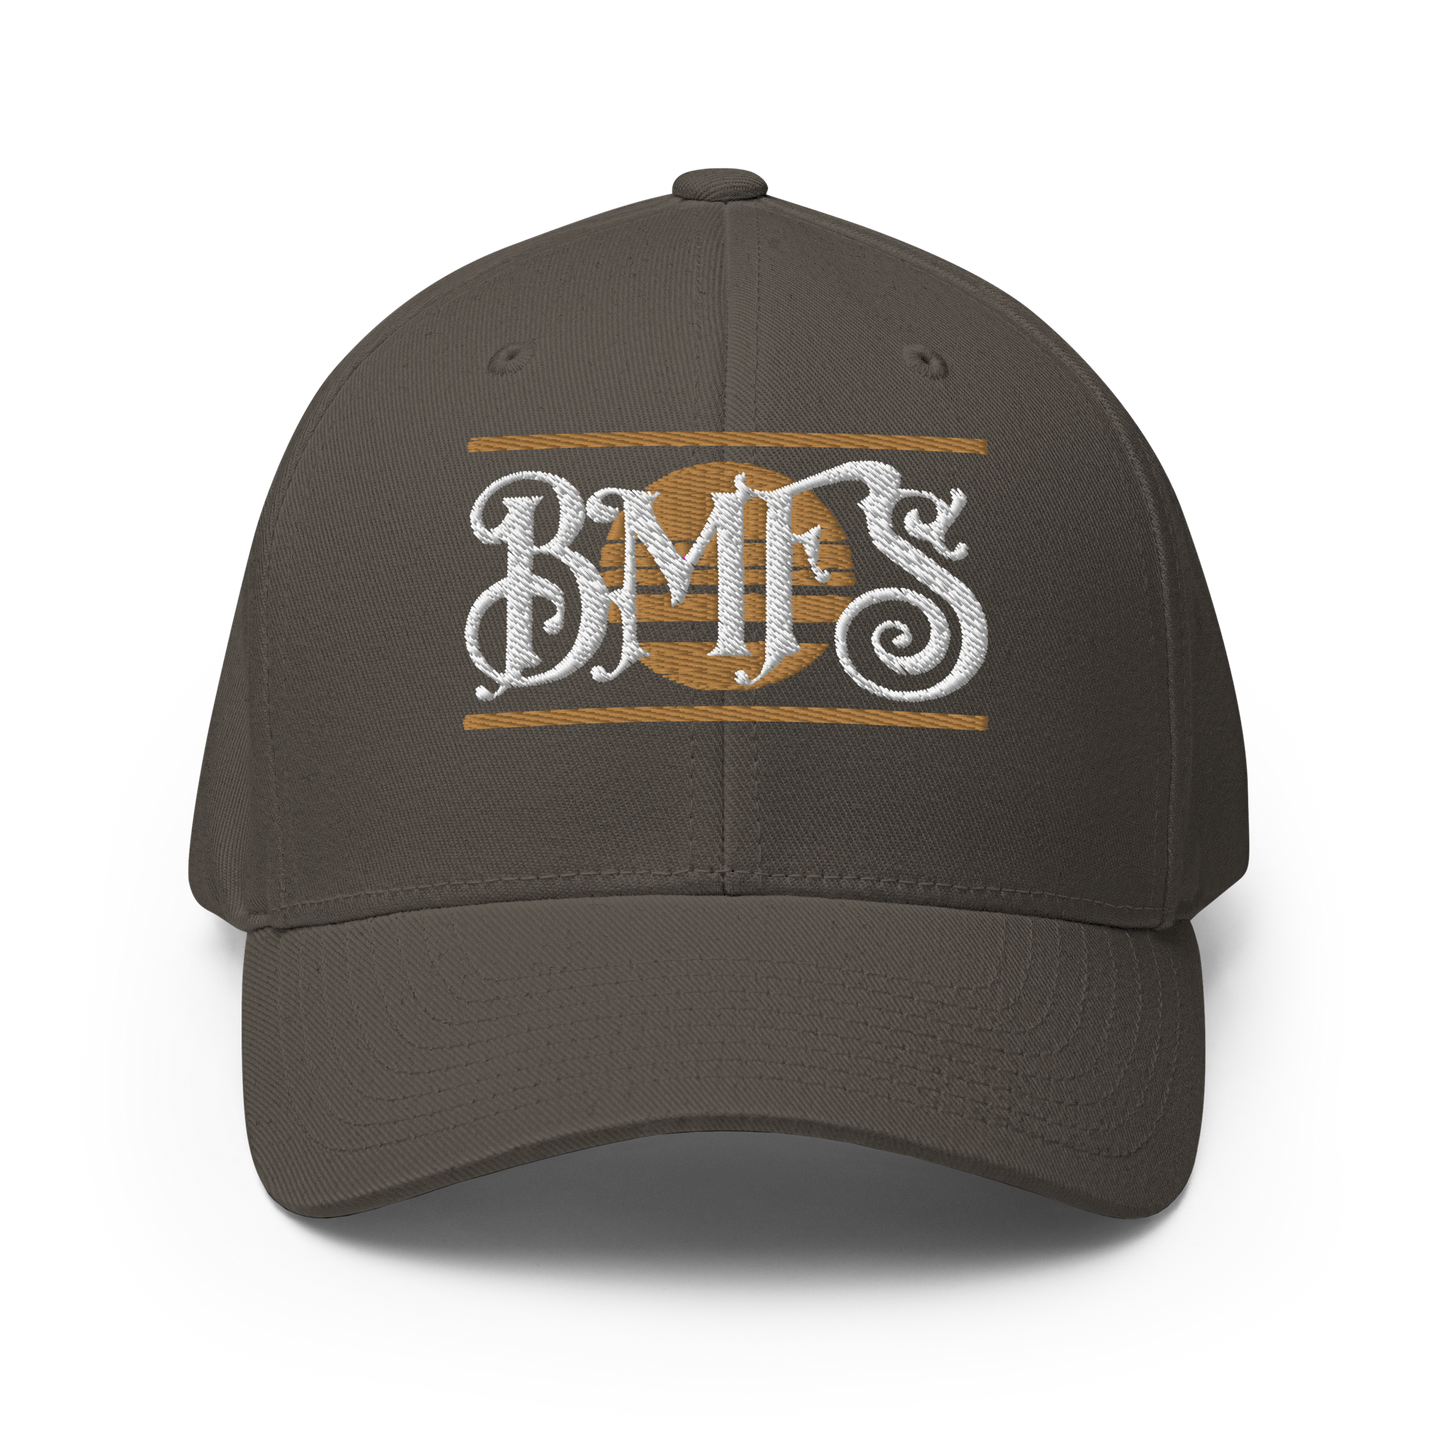 BMFS Sun FlexFit Structured Twill Cap | BMFS 33 Inspired Cap